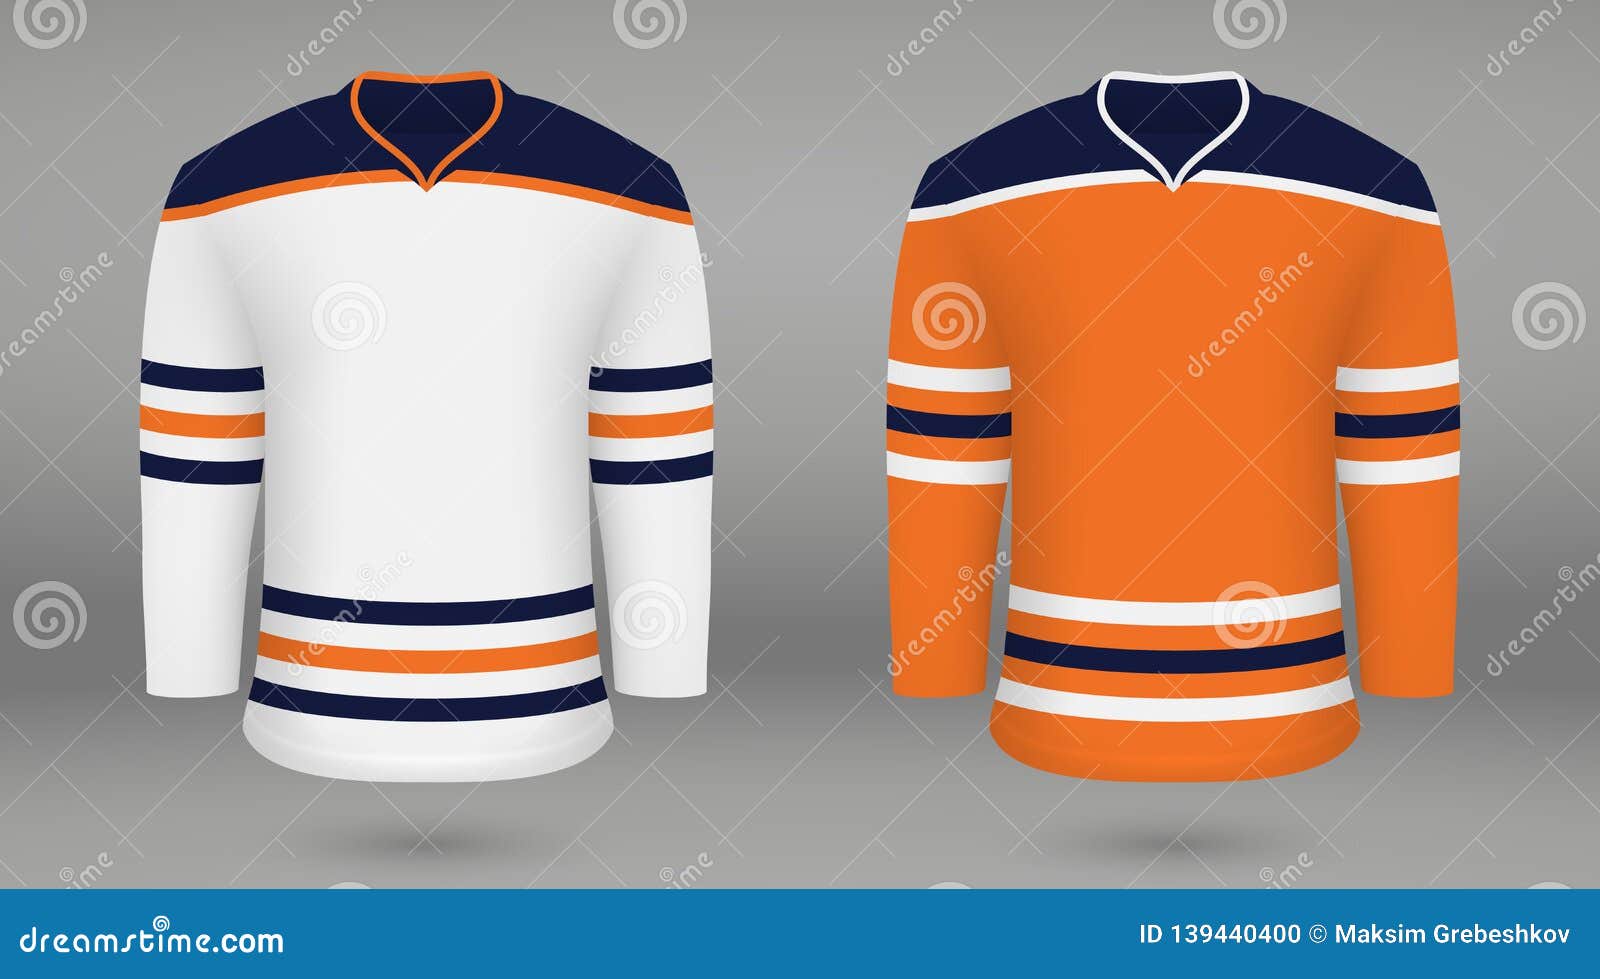 Download Shirt Template Forice Hockey Jersey Stock Illustration Illustration Of Edmonton Design 139440400